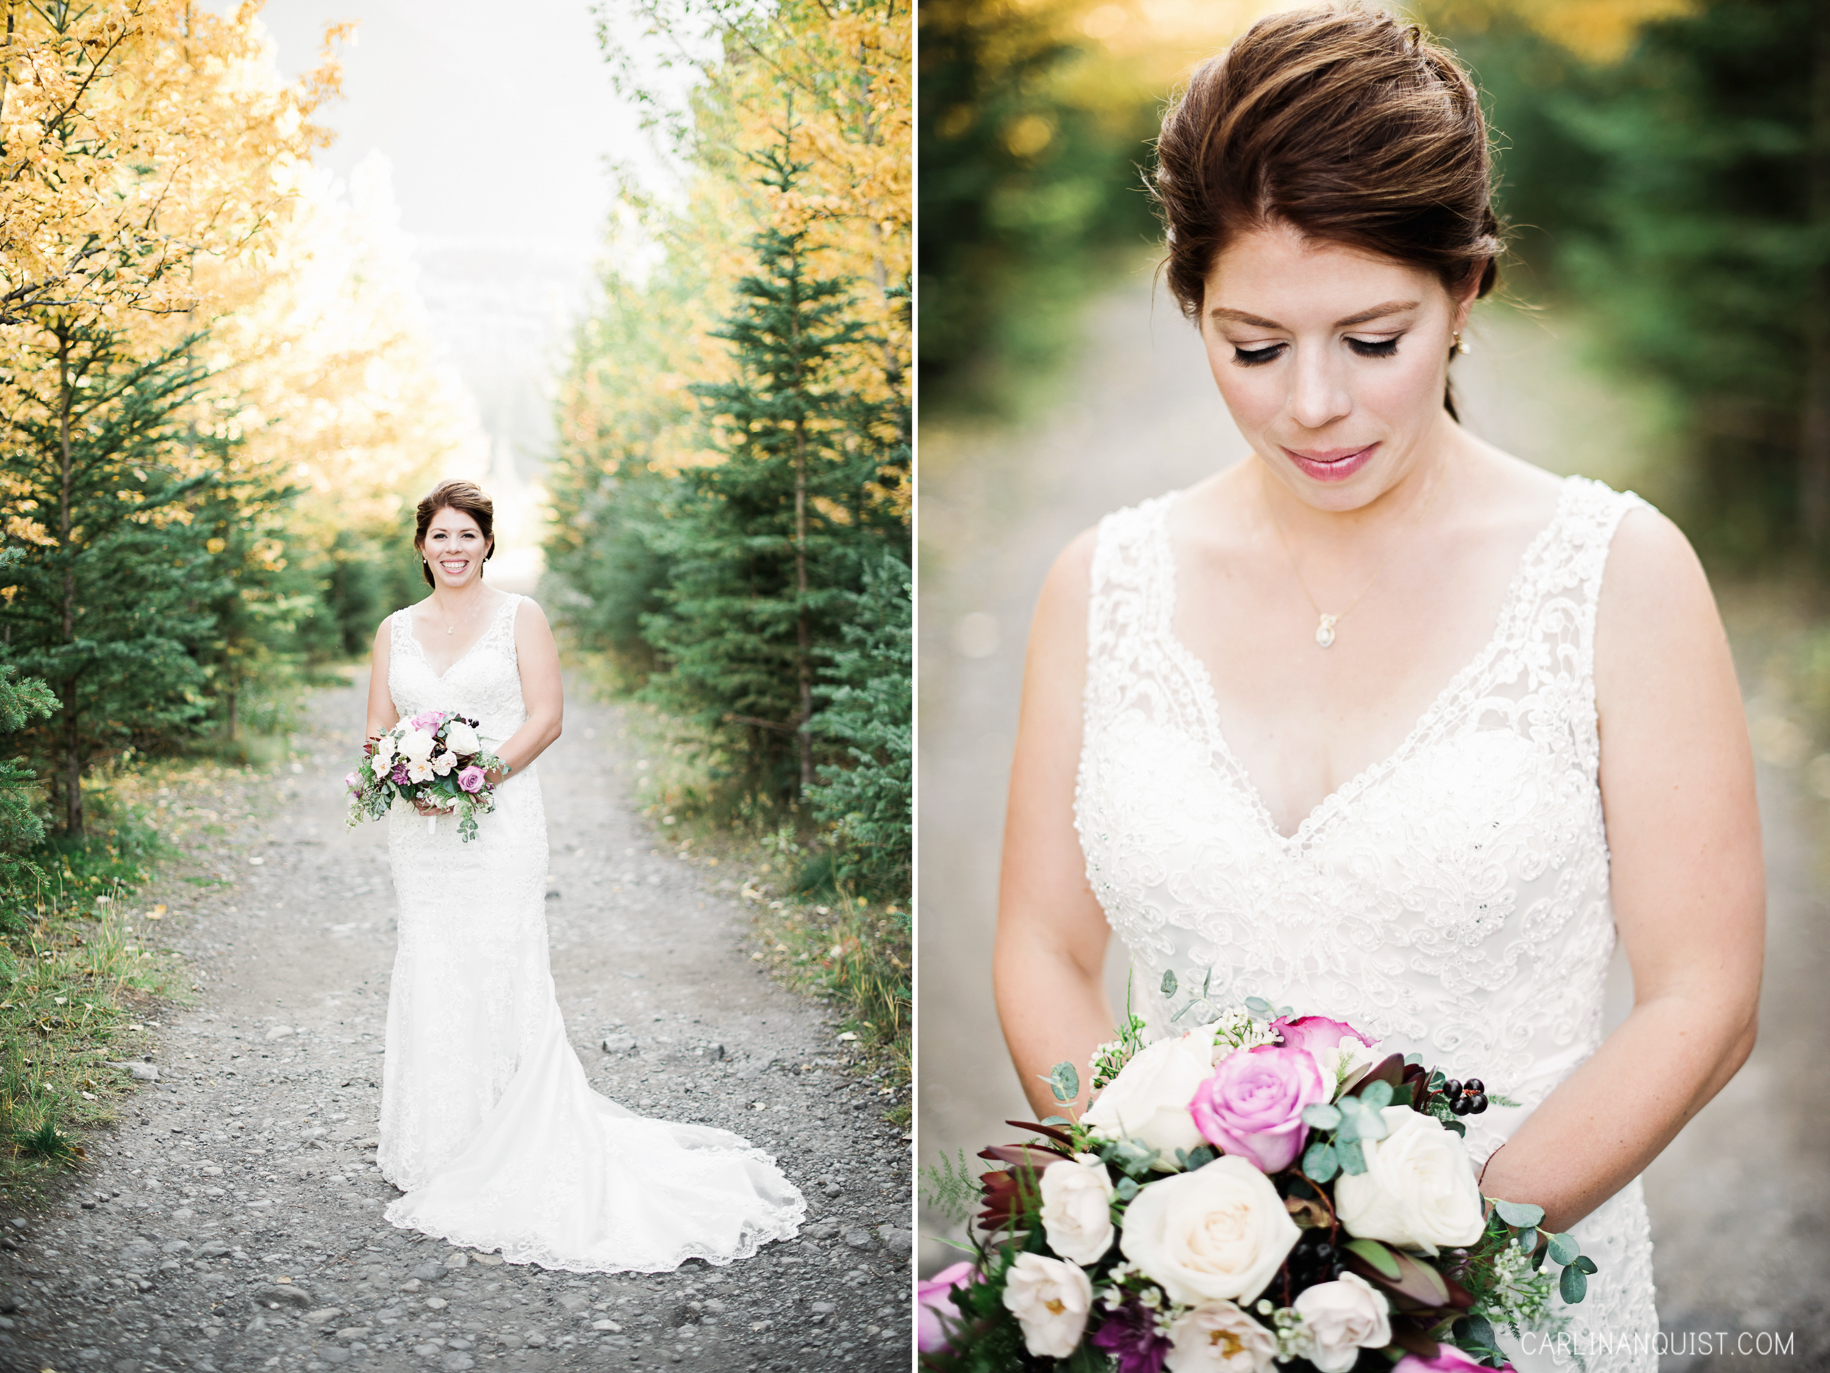 Bridal Portrait | Canmore Nordic Centre Wedding